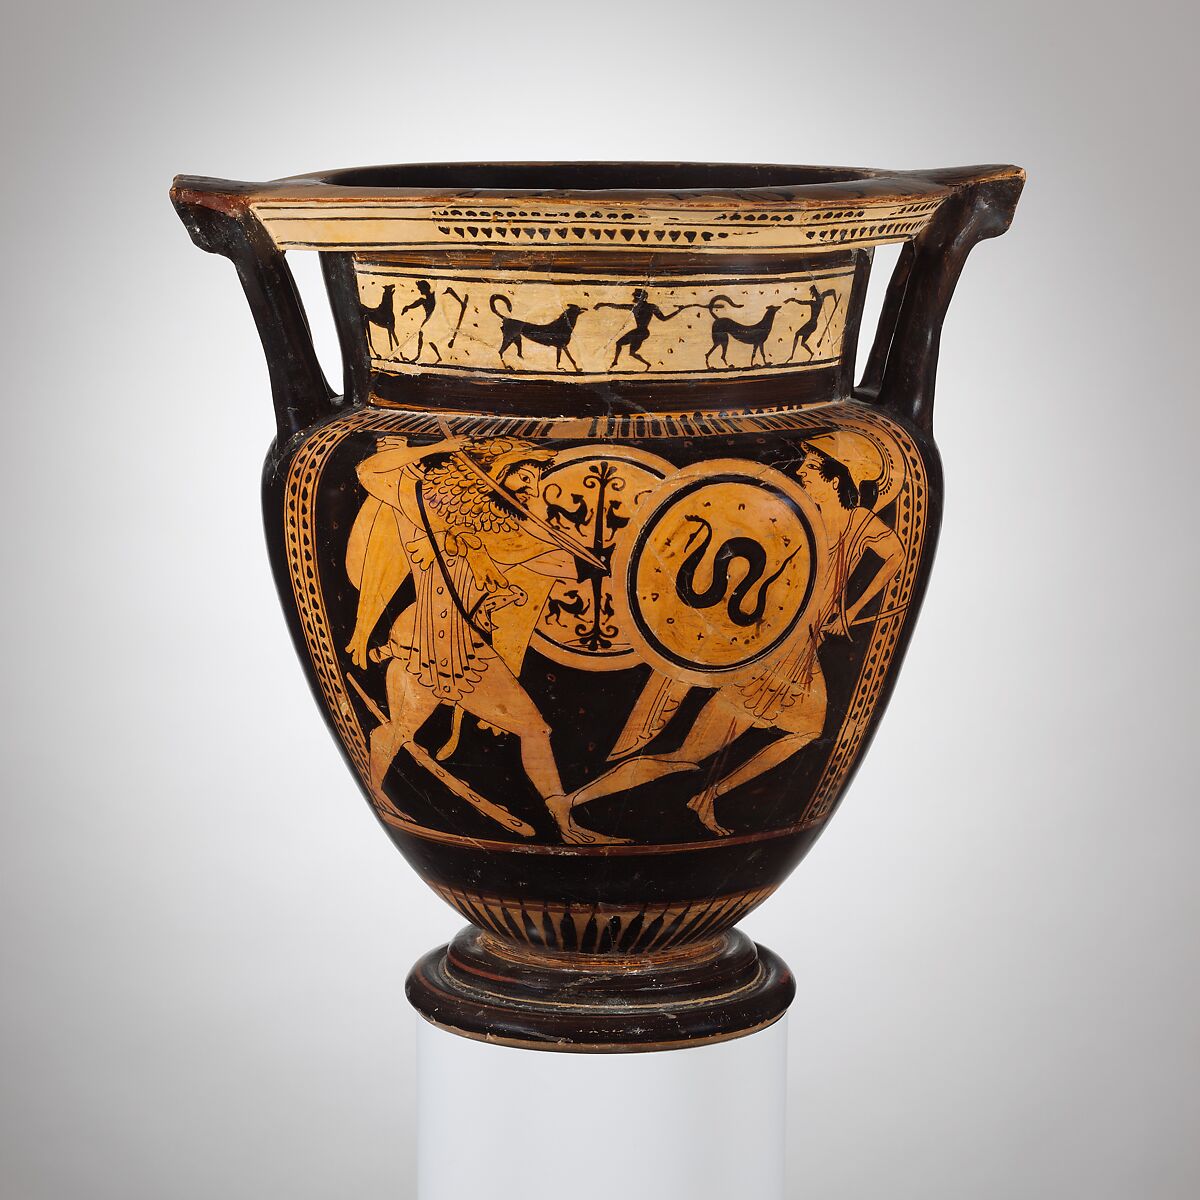 Terracotta column-krater (bowl for mixing wine and water), Göttingen Painter, Terracotta, Greek, Attic